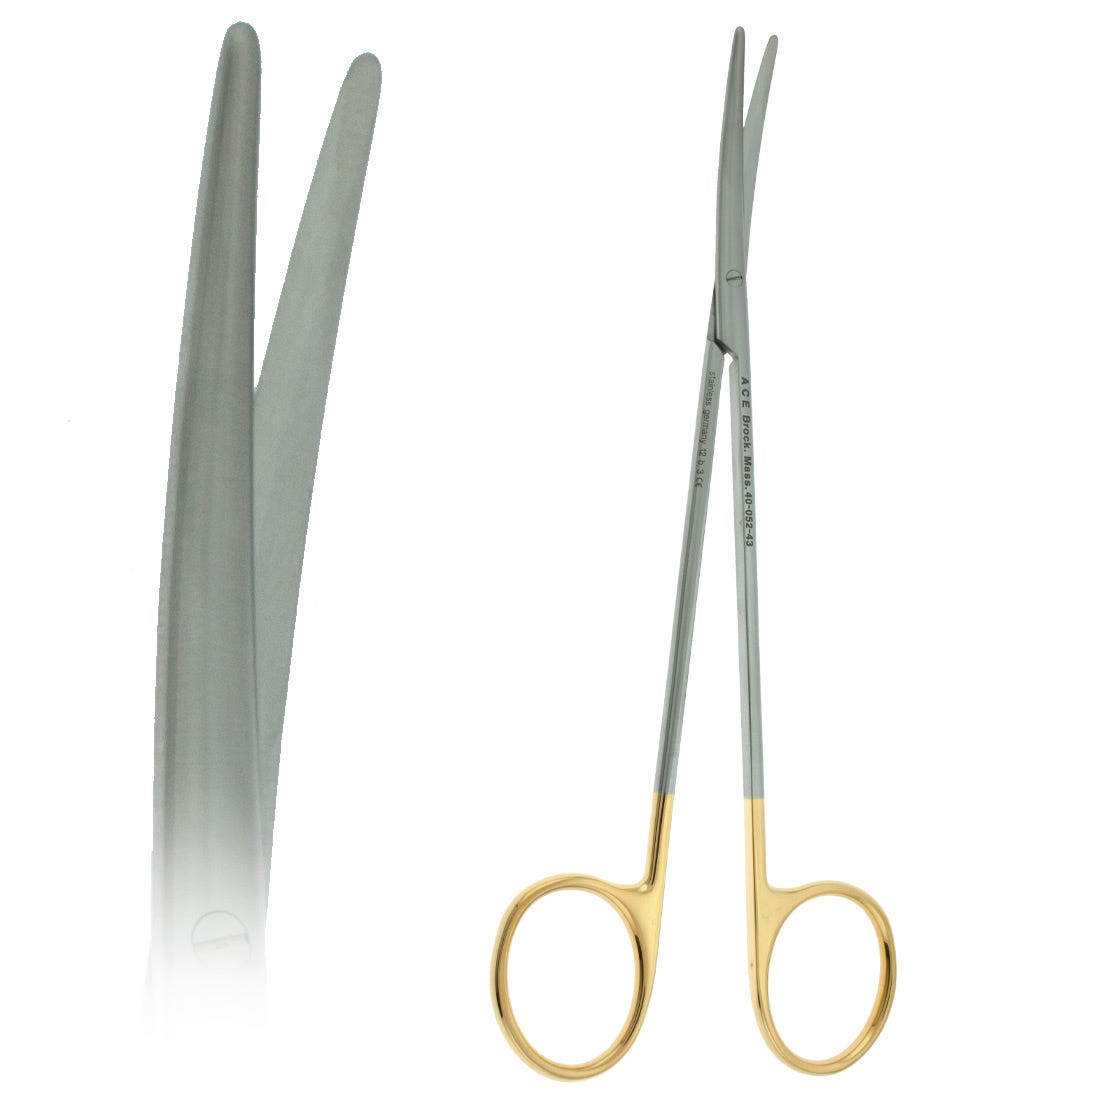 ACE Metzenbaum Scissors, delicate, curved, blunt, tungsten carbide tips